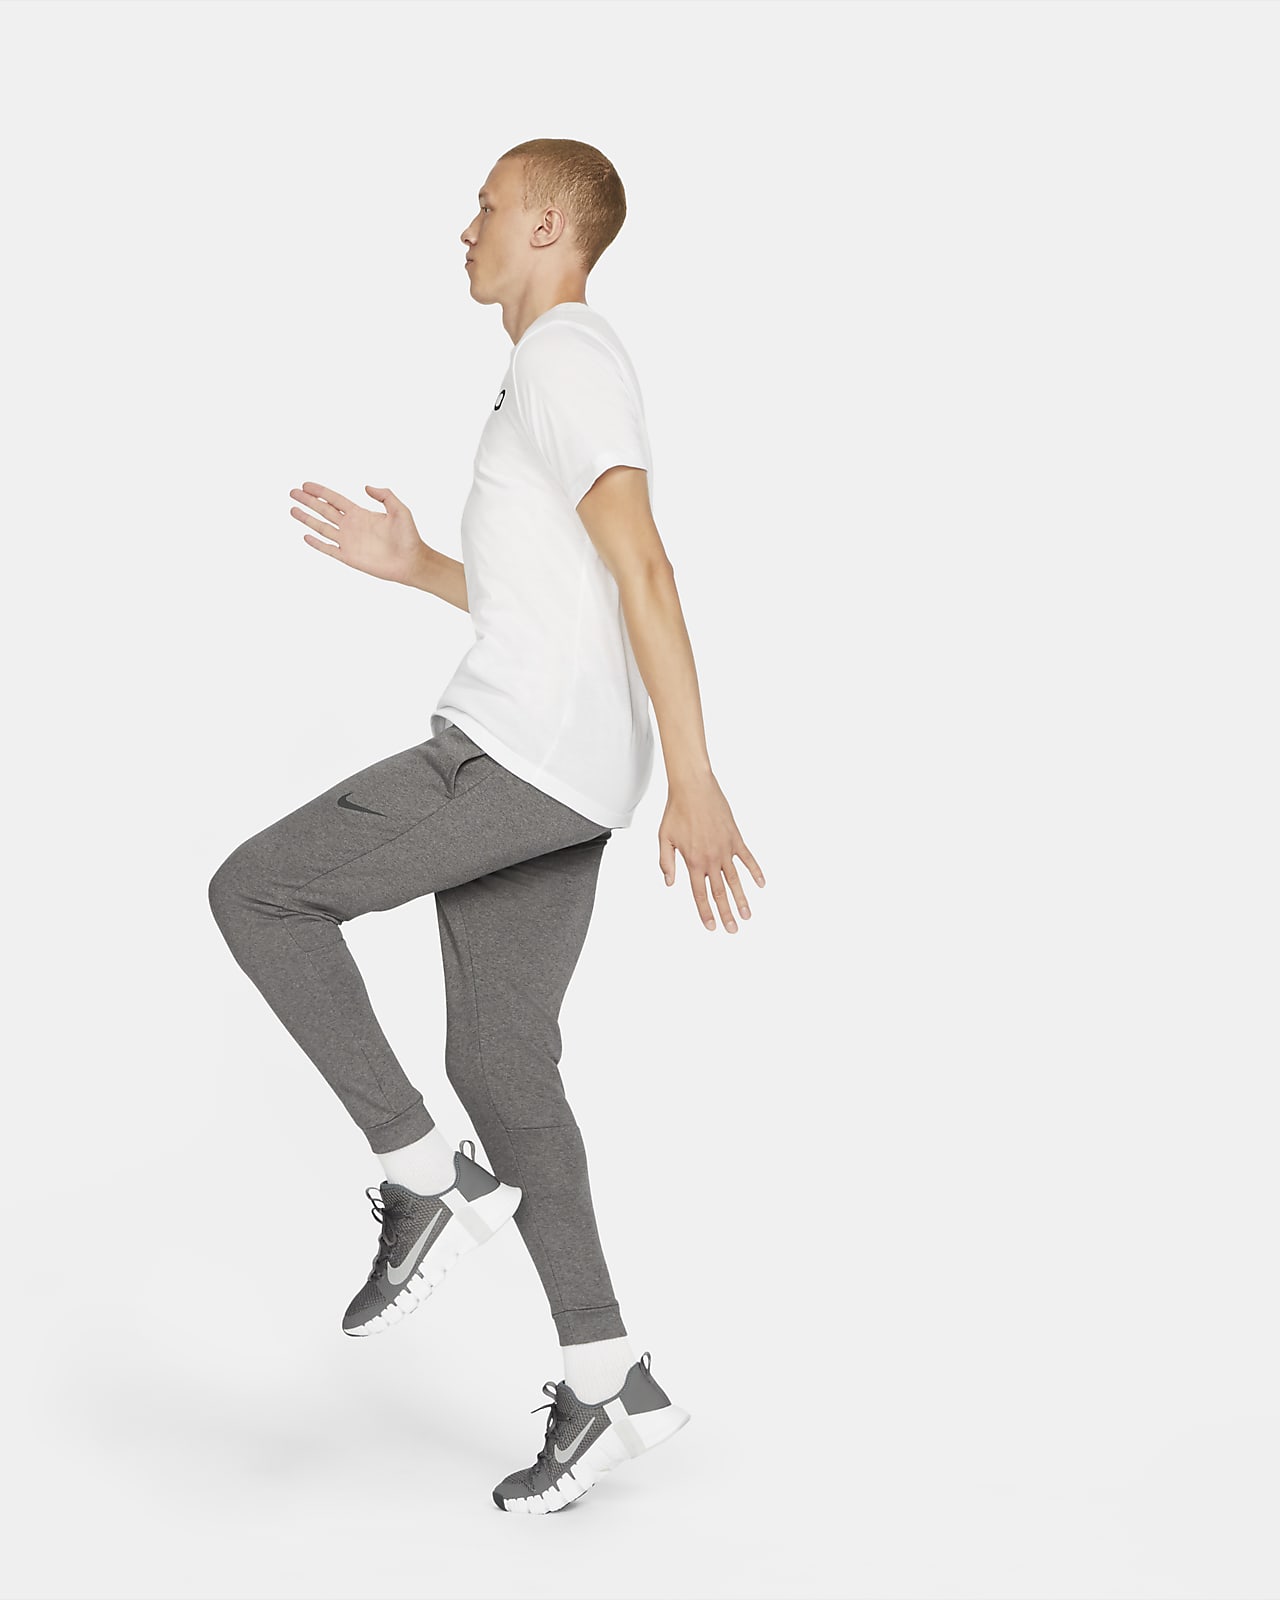 Nike Dry Taper Fleece Training Jogger Black Pants Mens Cj4312-010 Size 4xl  for sale online